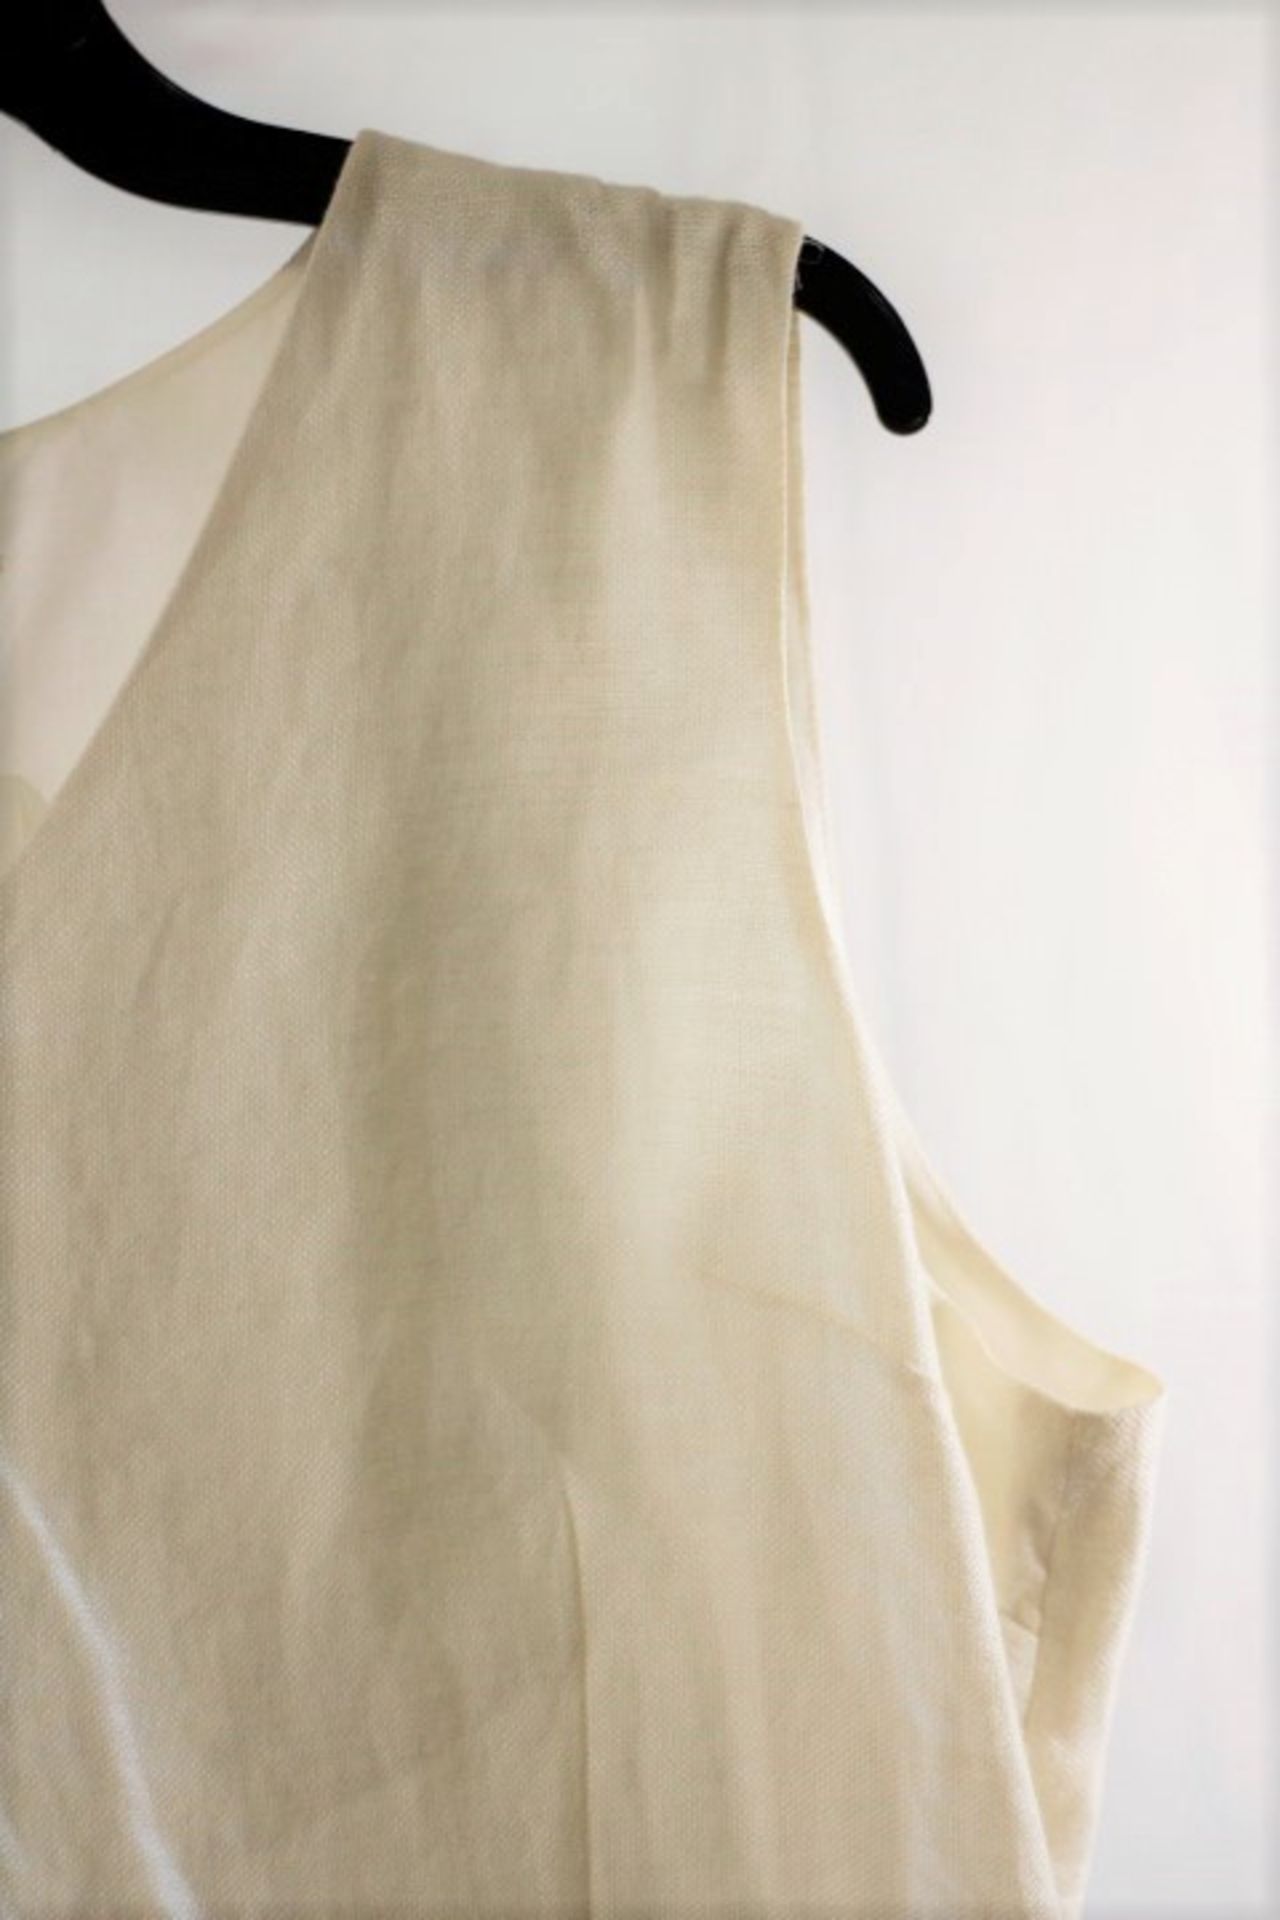 1 x Constantin Paris White Top - Size: 24 - Material: Acetate, Acrylic, Cotton, Fibre, Polyester, - Image 8 of 8